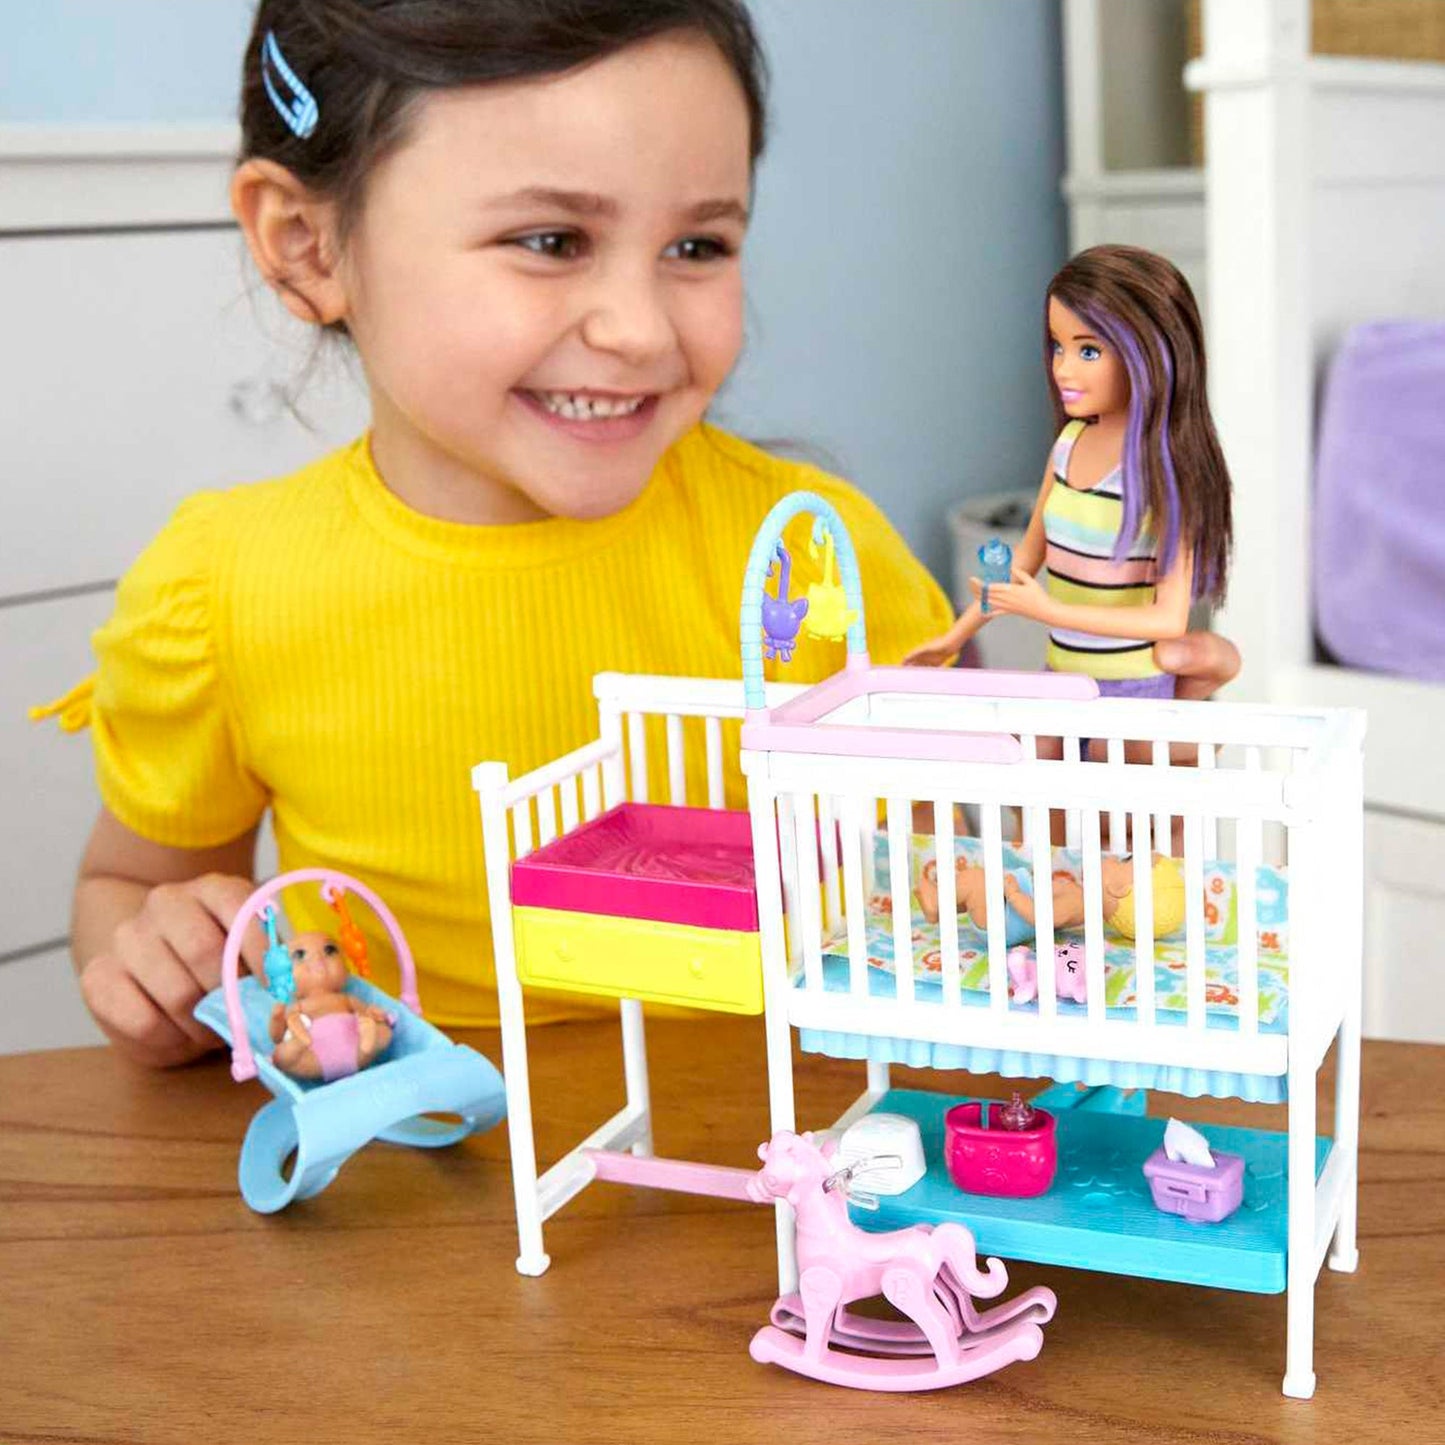 Barbie Skipper Babysitters Inc Nap 'n' Nurture Nursery Dolls and Playset